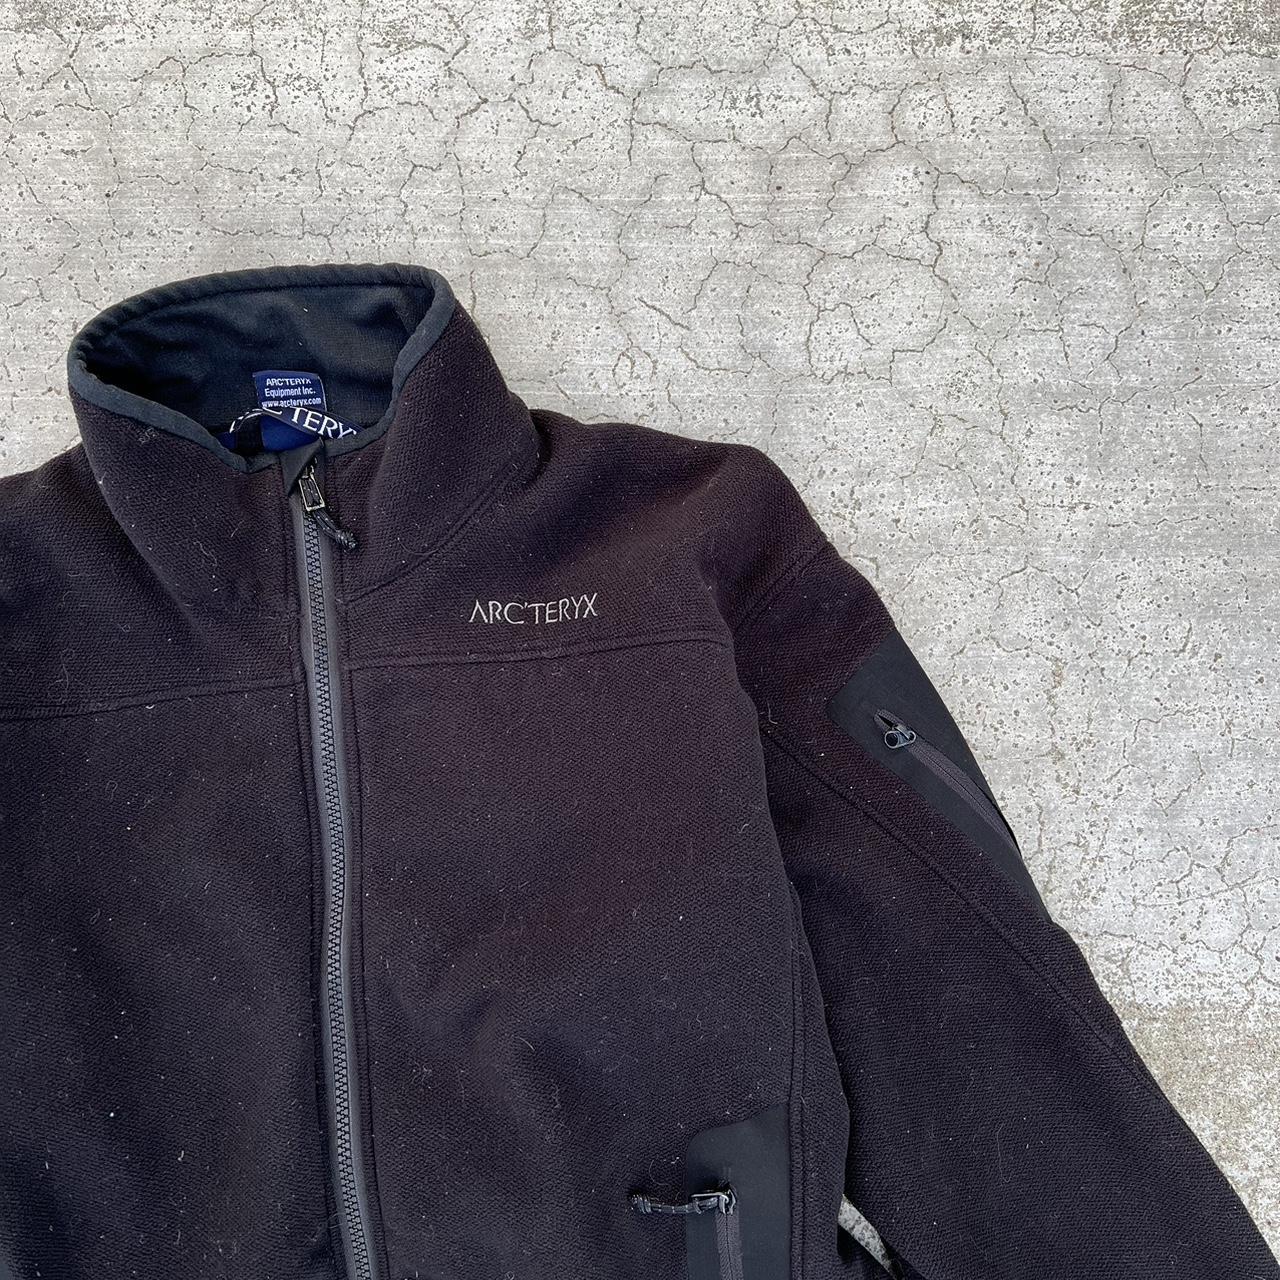 RARE vintage arc’teryx full zip jacket super warm,... - Depop